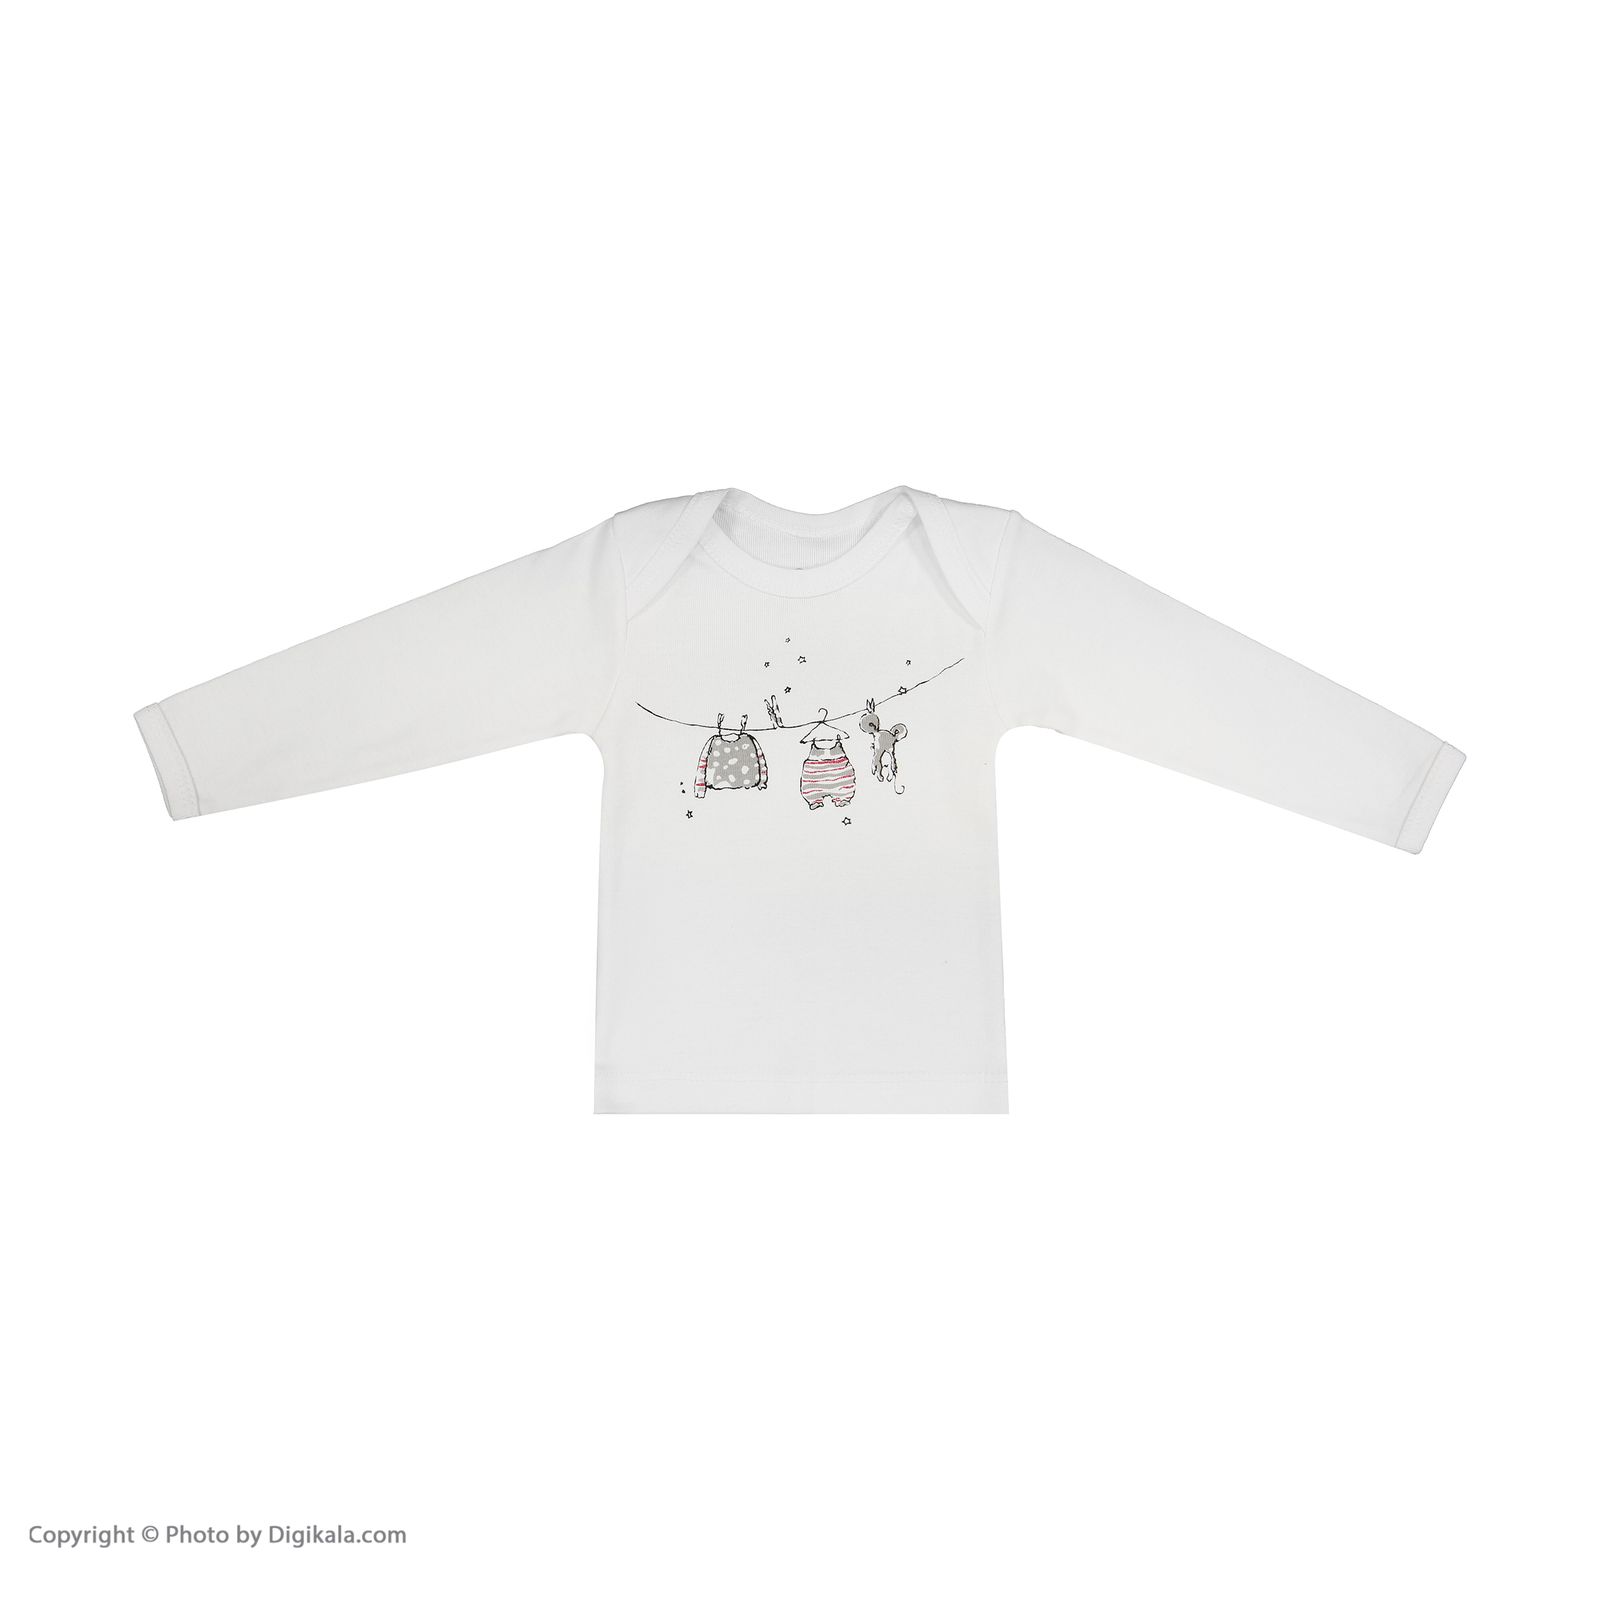 تی شرت نوزادی سون پون مدل 1391213-01 -  - 2